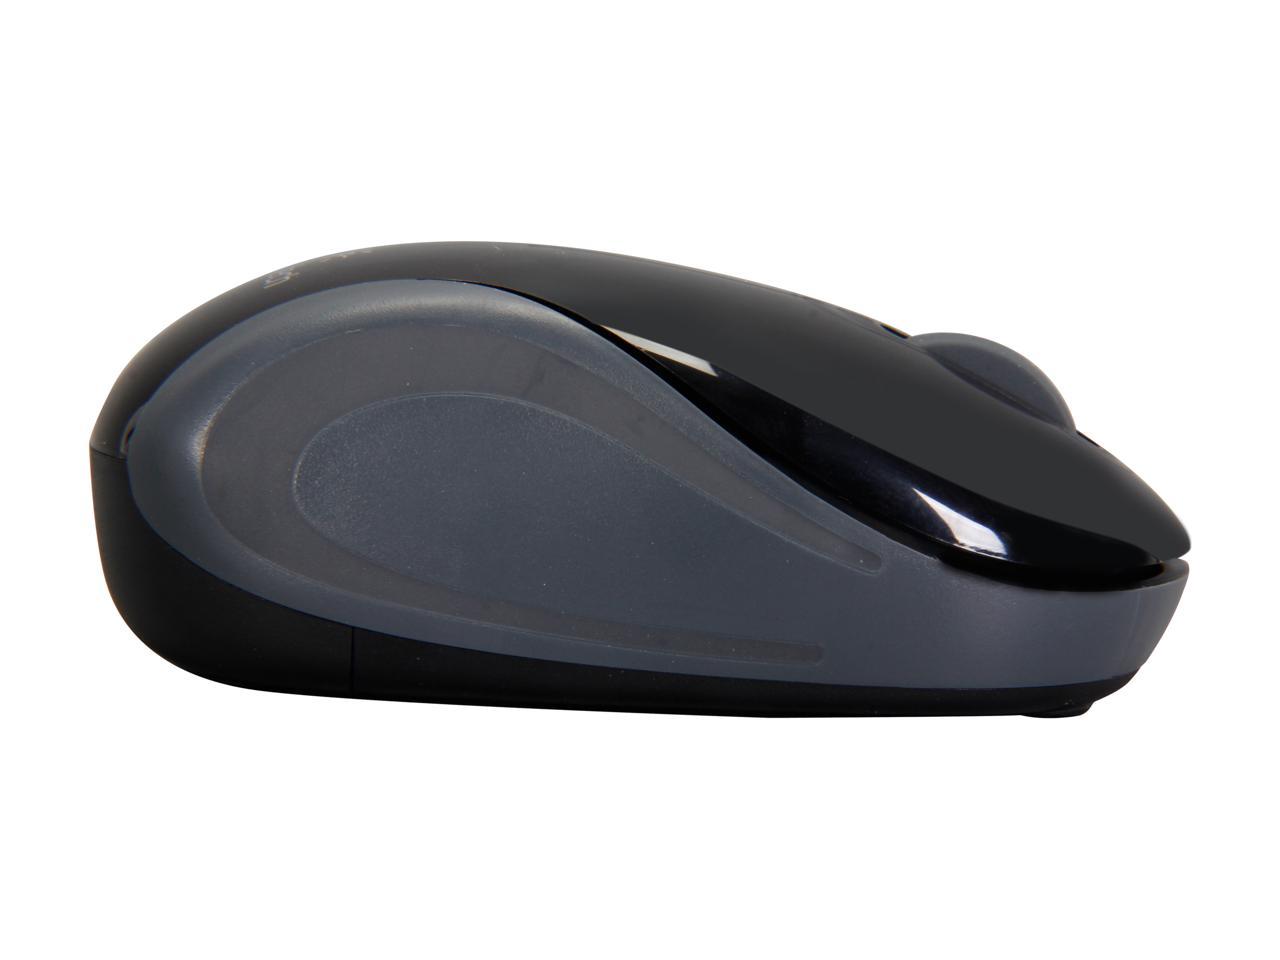 Logitech 910-002726 Black 3 Buttons 1 x Wheel USB RF Wireless Optical 1000 dpi Mouse